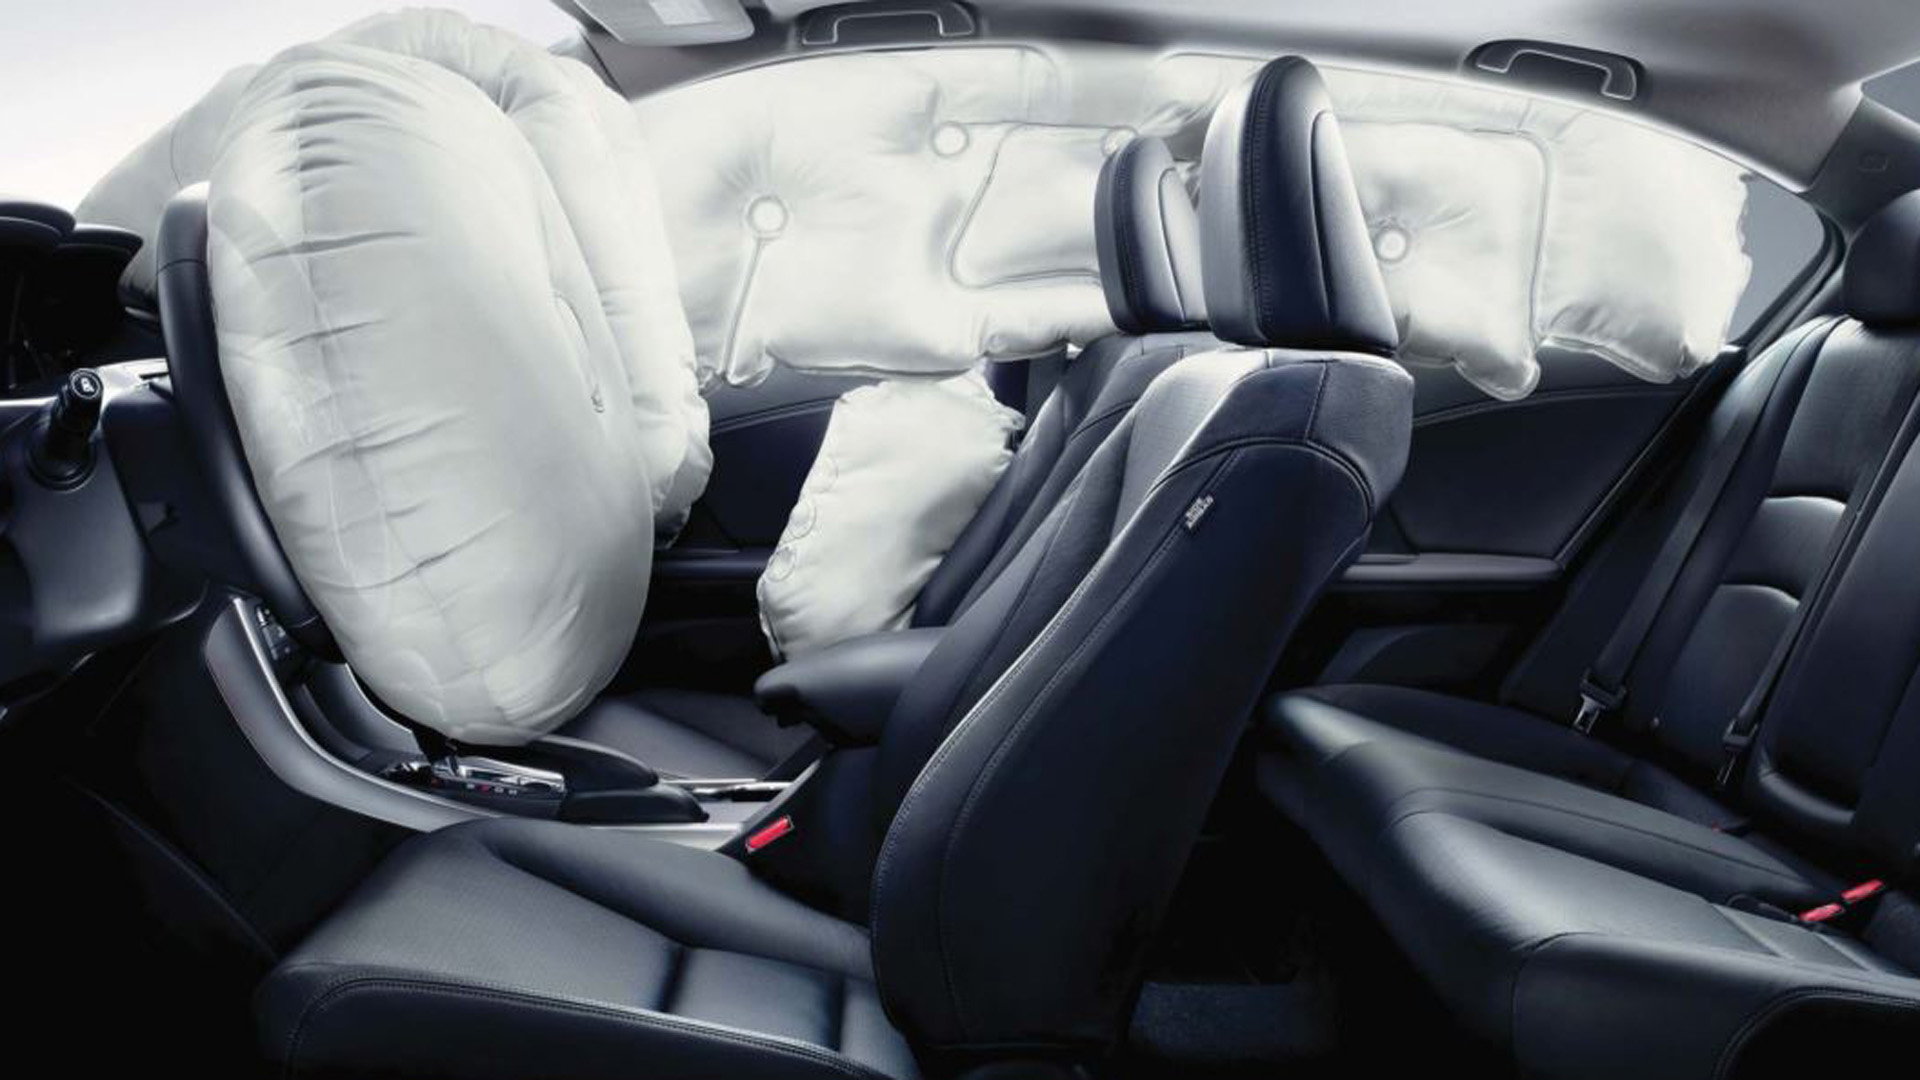 Honda Accord: How to Install Airbag | Honda-tech